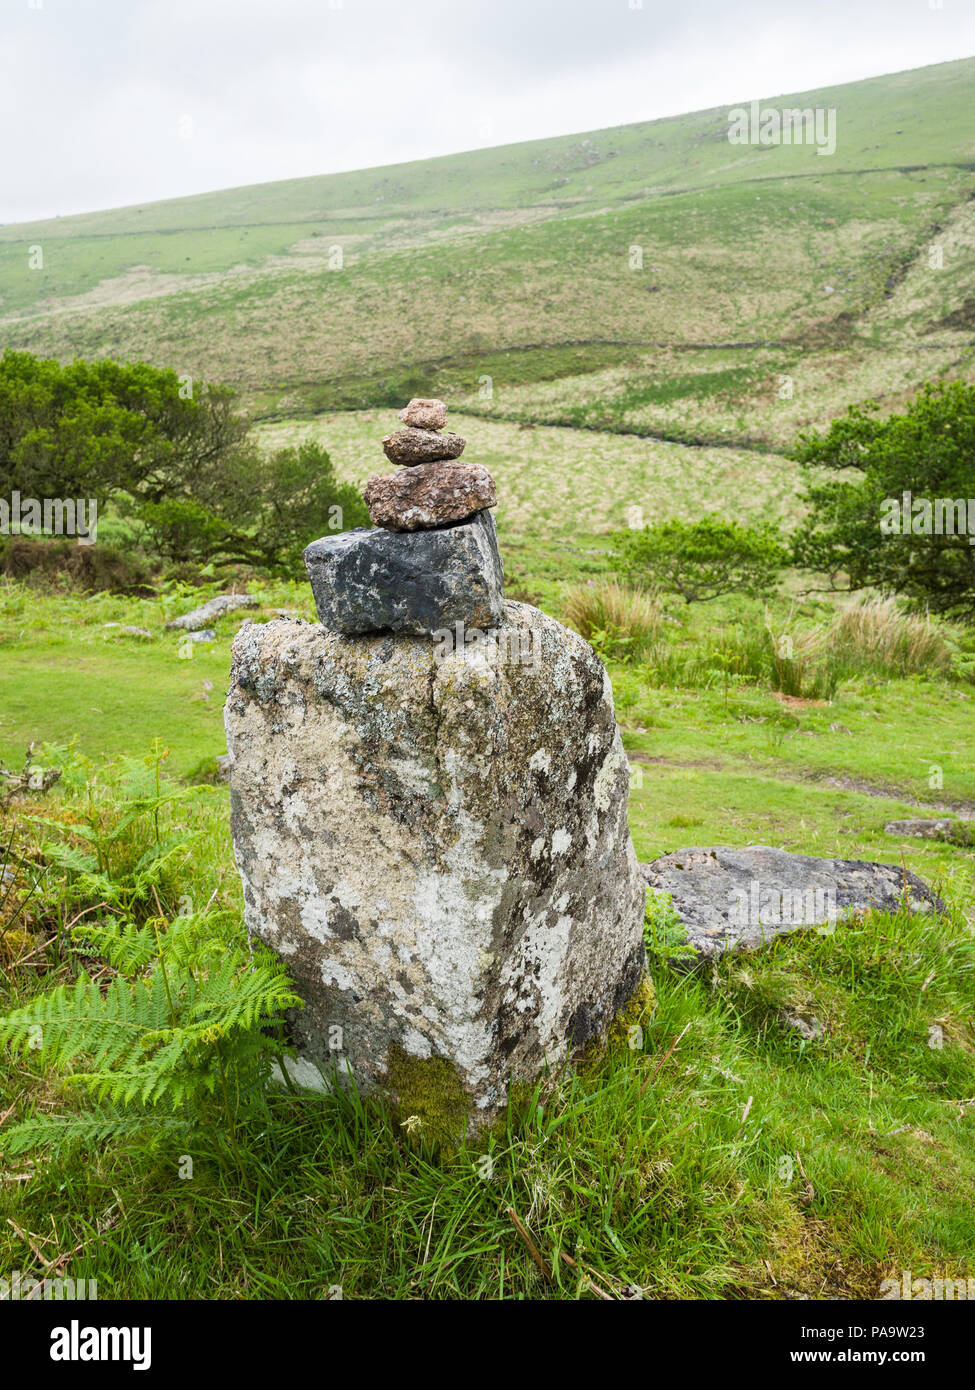 A rock cairn near Wistman's Wood National Nature Reserve, Dartmoor National Park, Devon, UK. Stock Photo